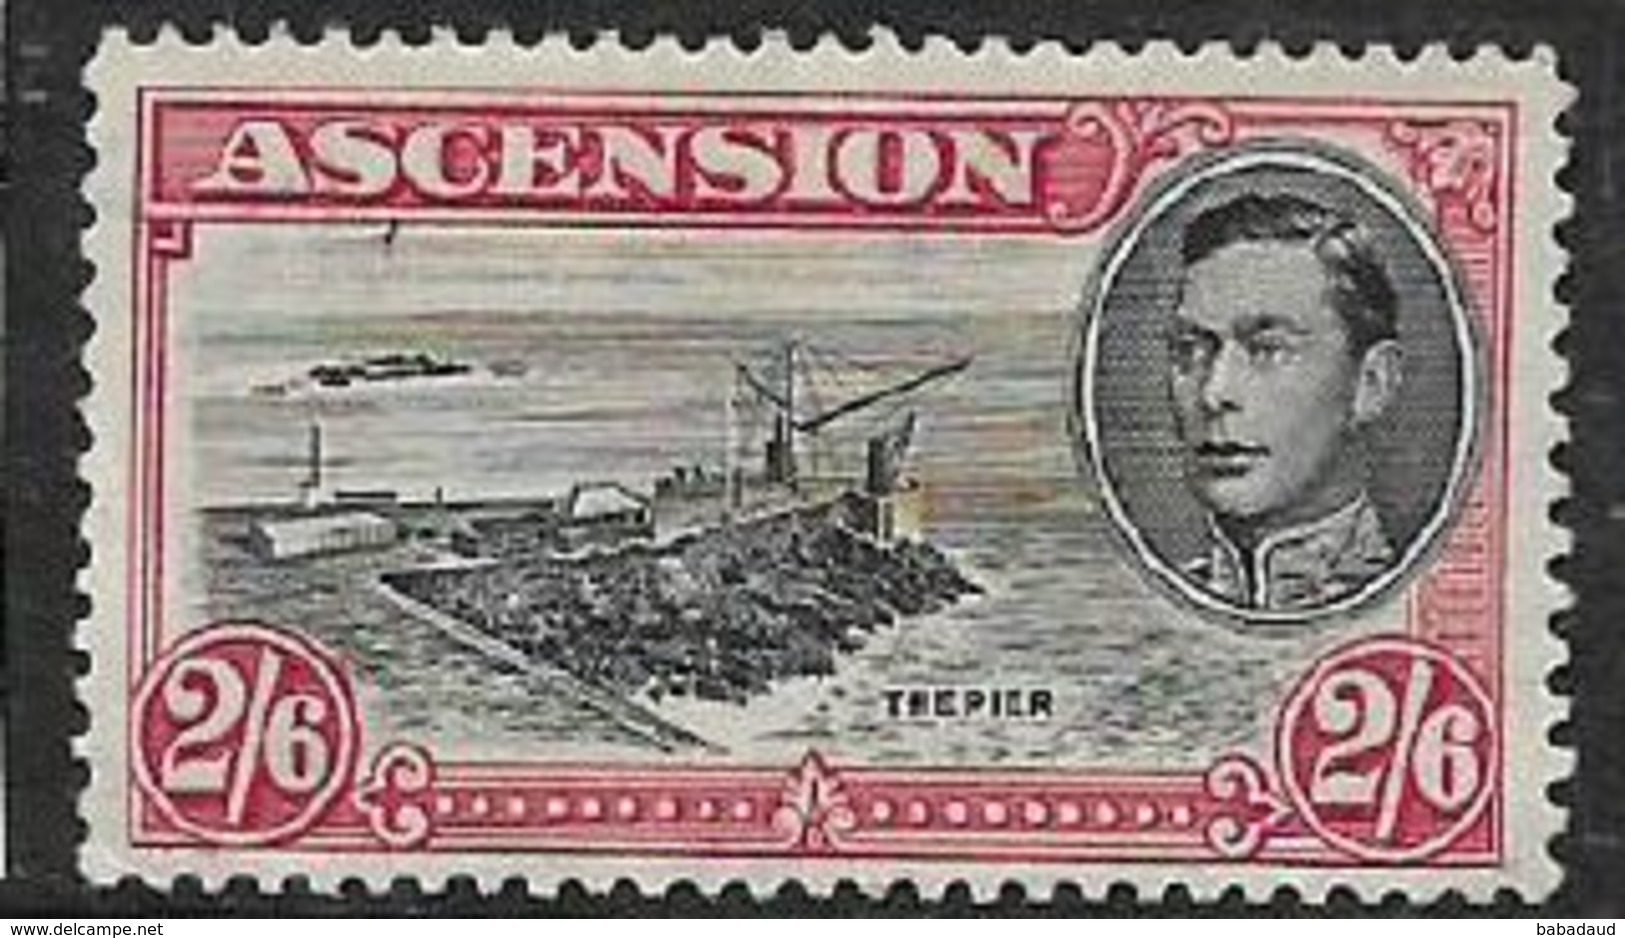 Ascension Island, GVIR, 1944, 2/6,, Perf 13, MH * - Ascension